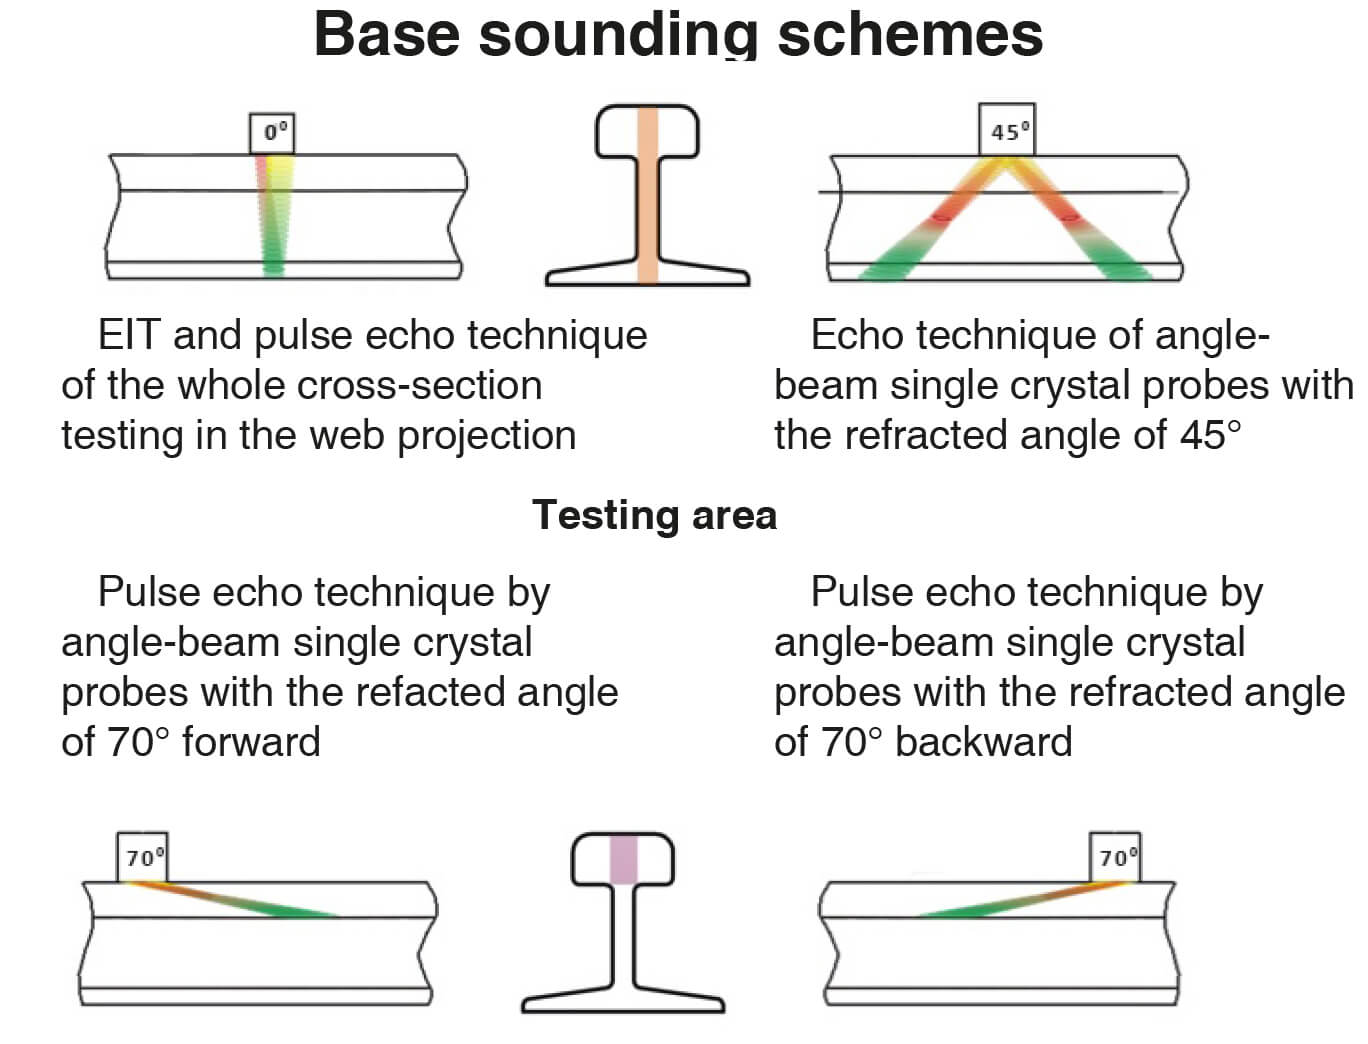 Ultrasonic rail base sounding schemes